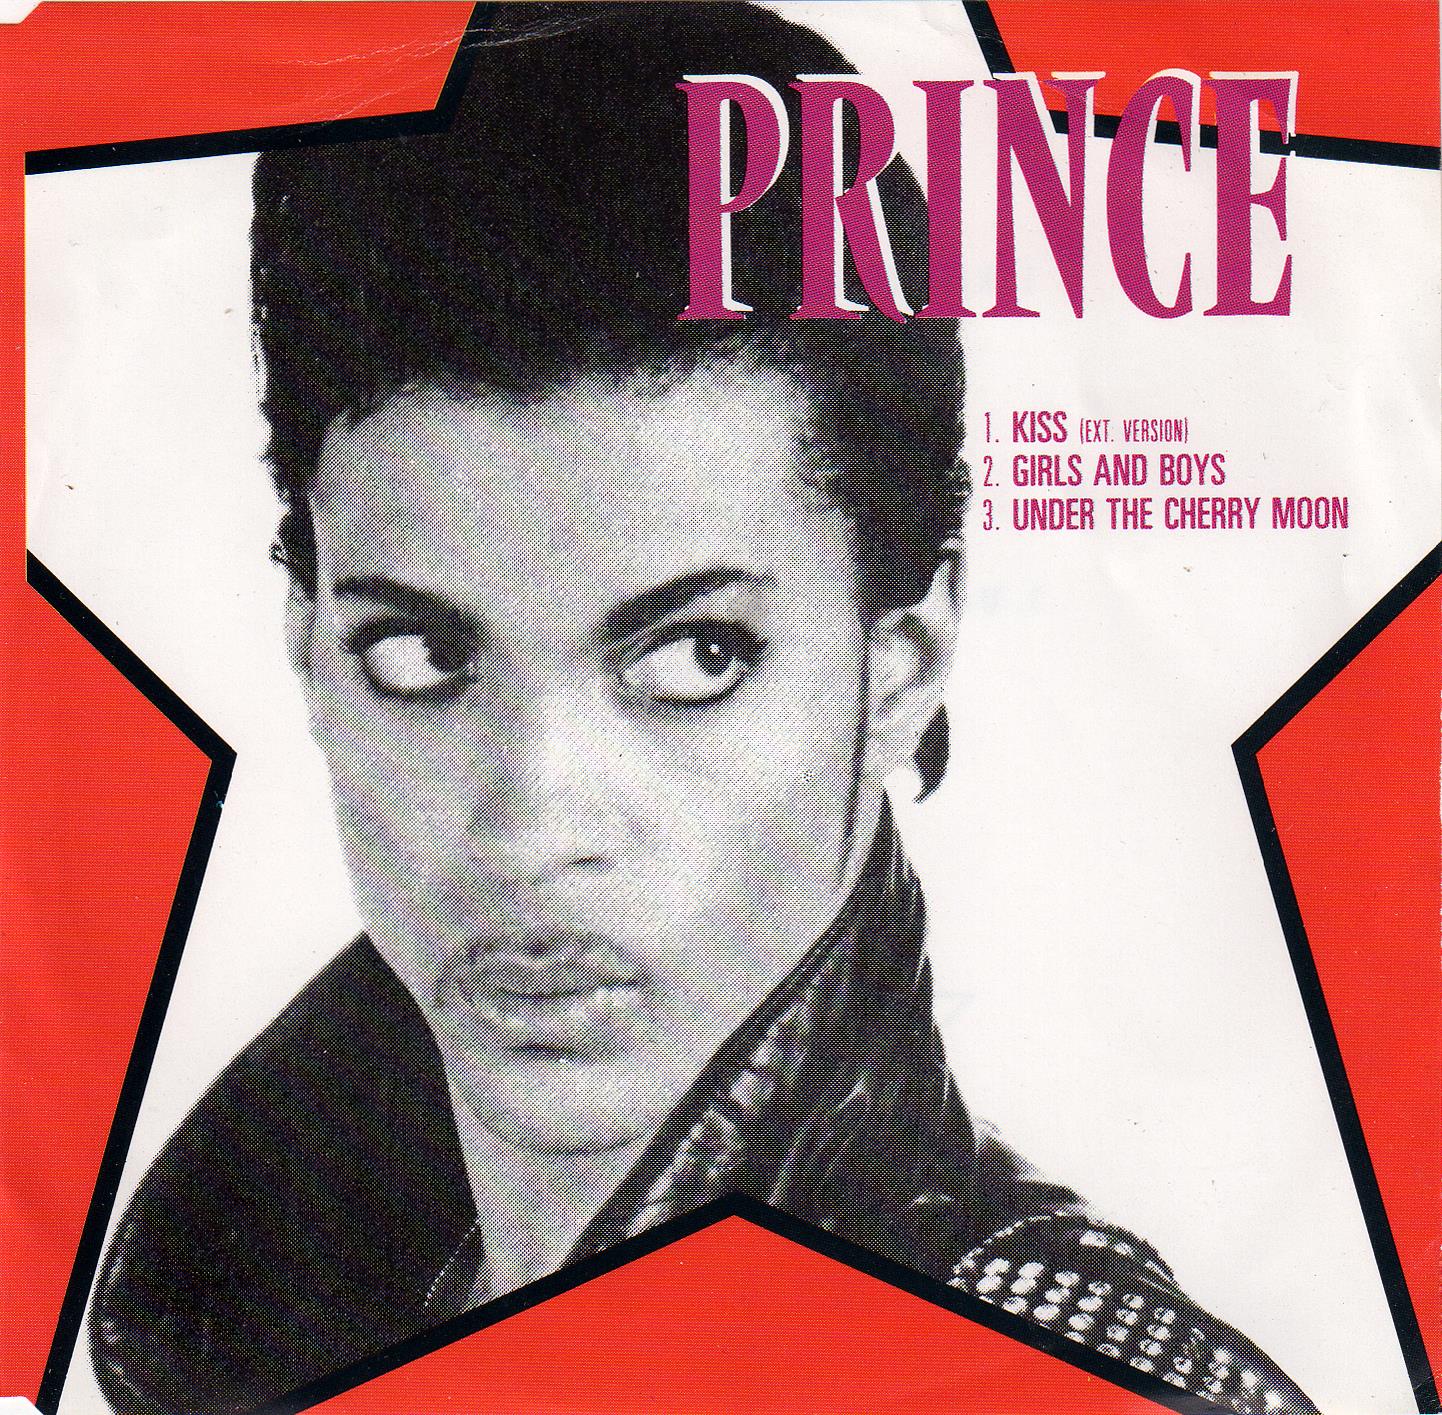 Prince - 1. Kiss 2. Girls And Boys 3. Under The Cherry Moon (Cdm)(1989)